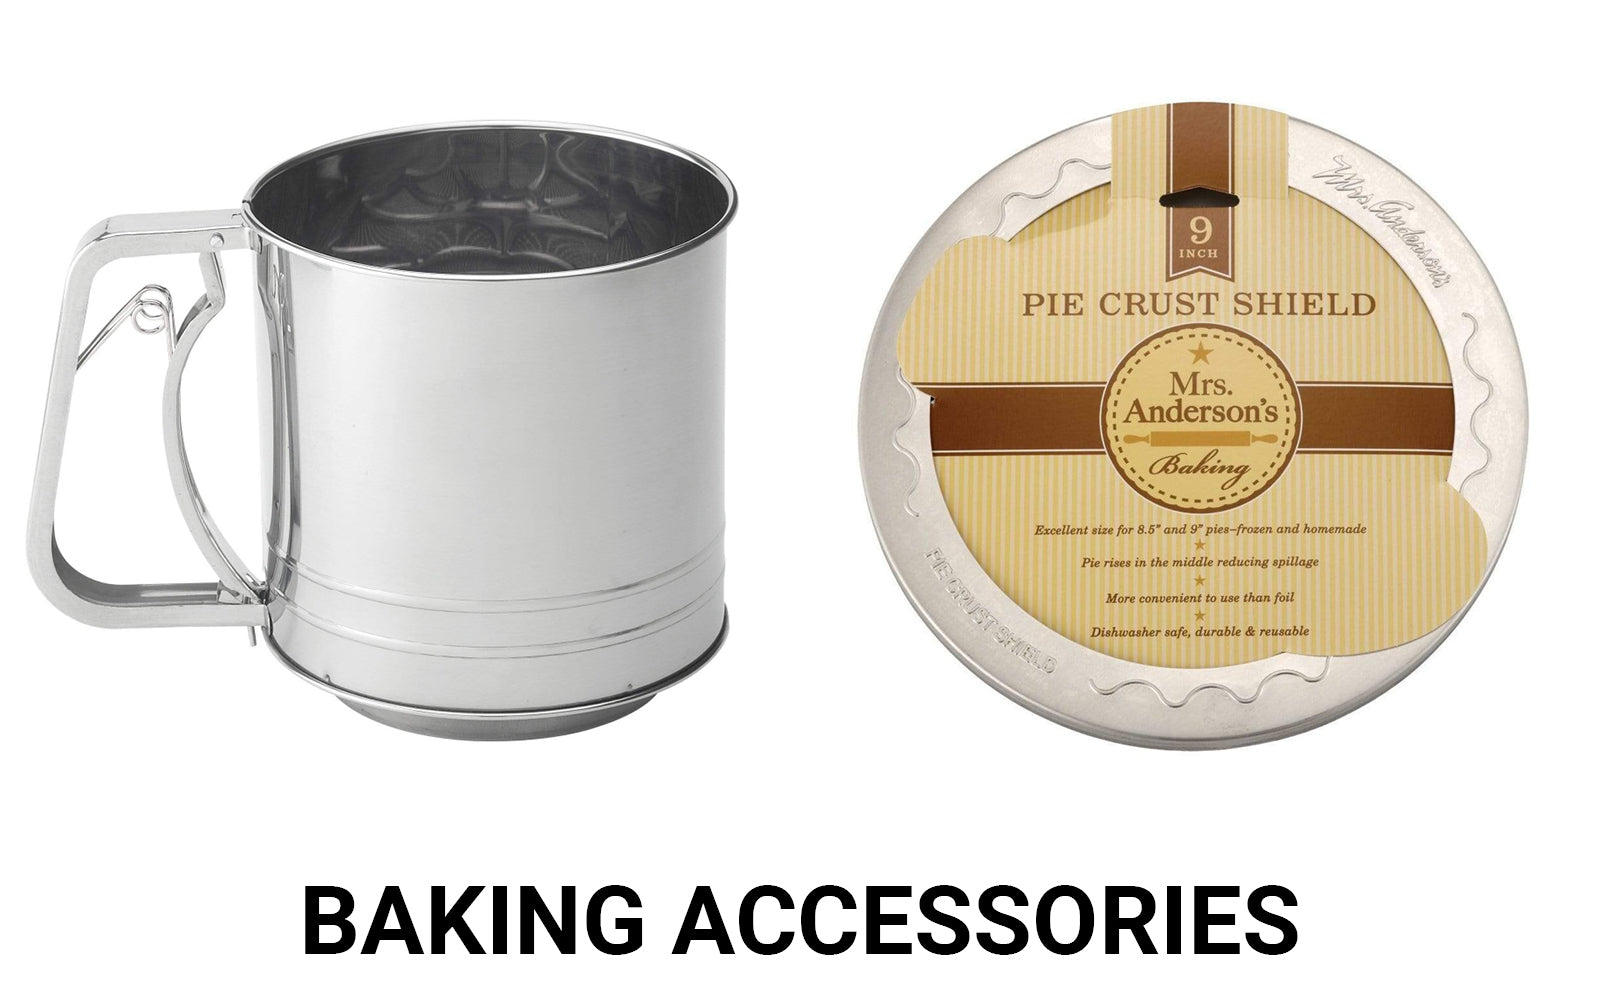 Baking Accessories